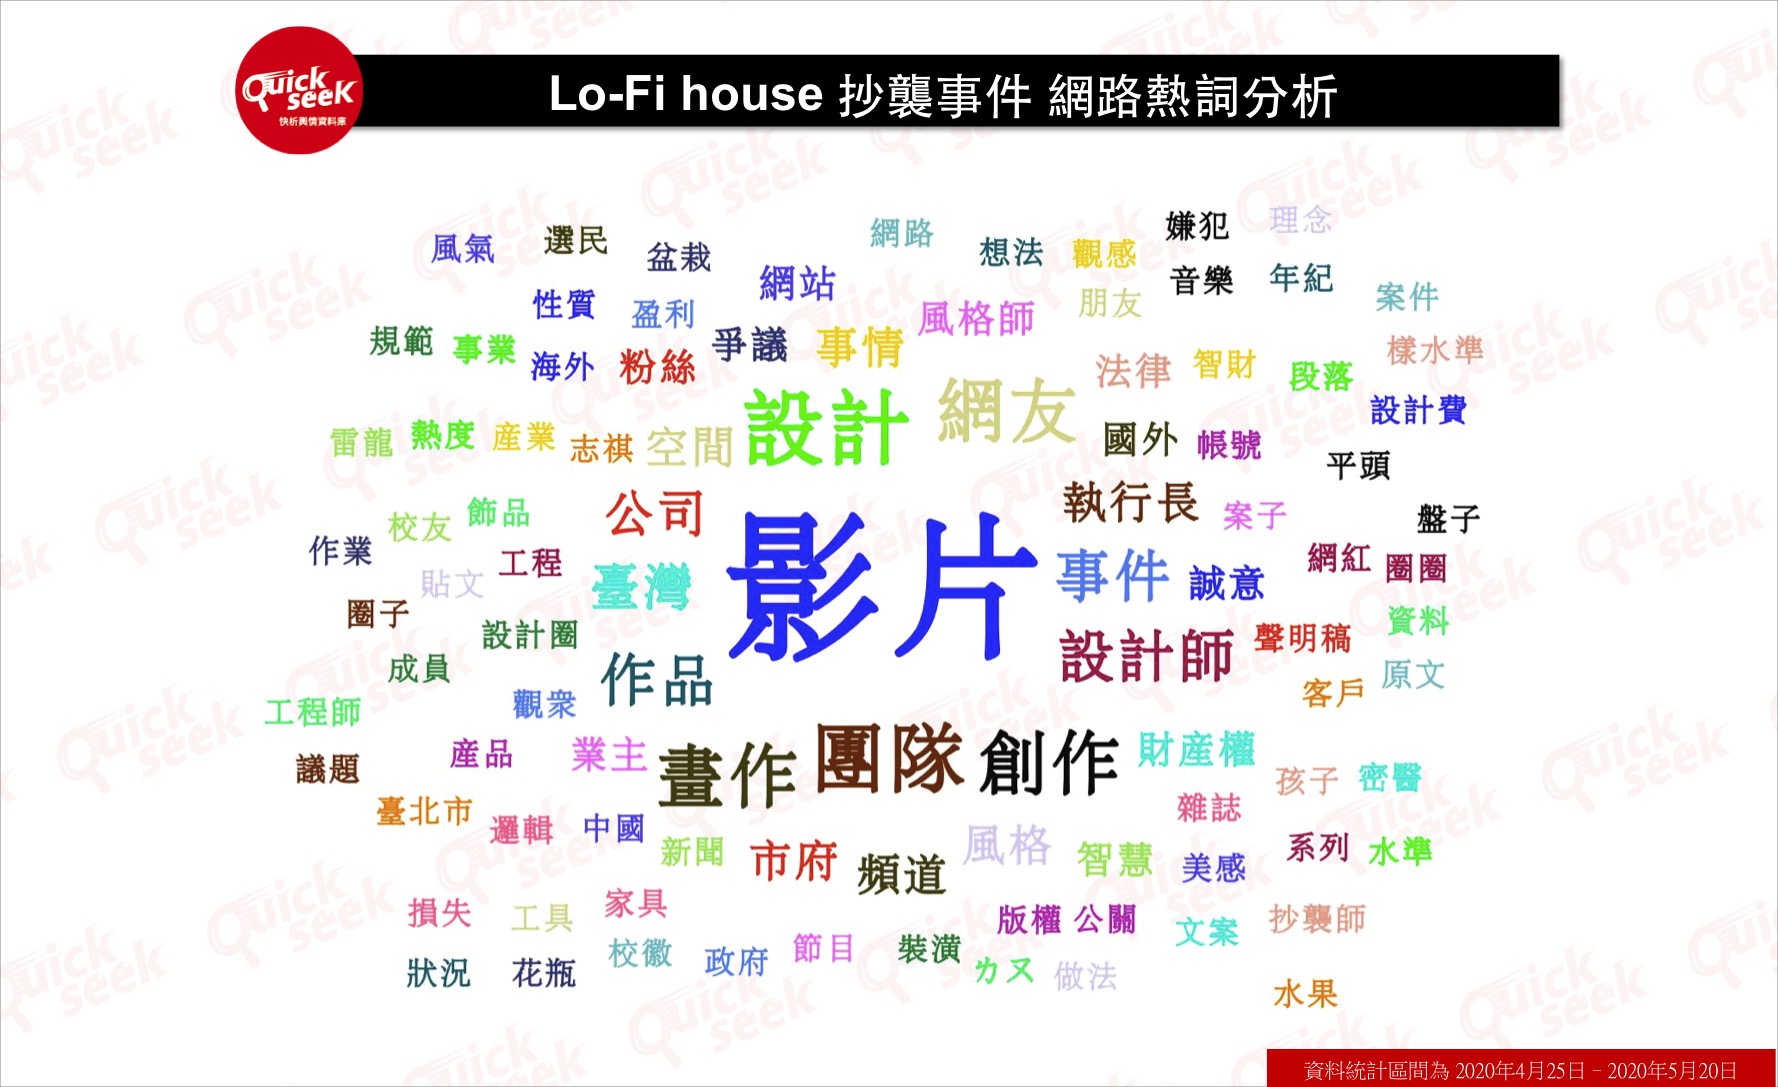 Macintosh HD:Users:koushouon:Desktop:（冠真）原創變抄襲  Lo-Fi House要自救網友這樣說:20200525_抄襲事件_03網路熱詞分析.jpg